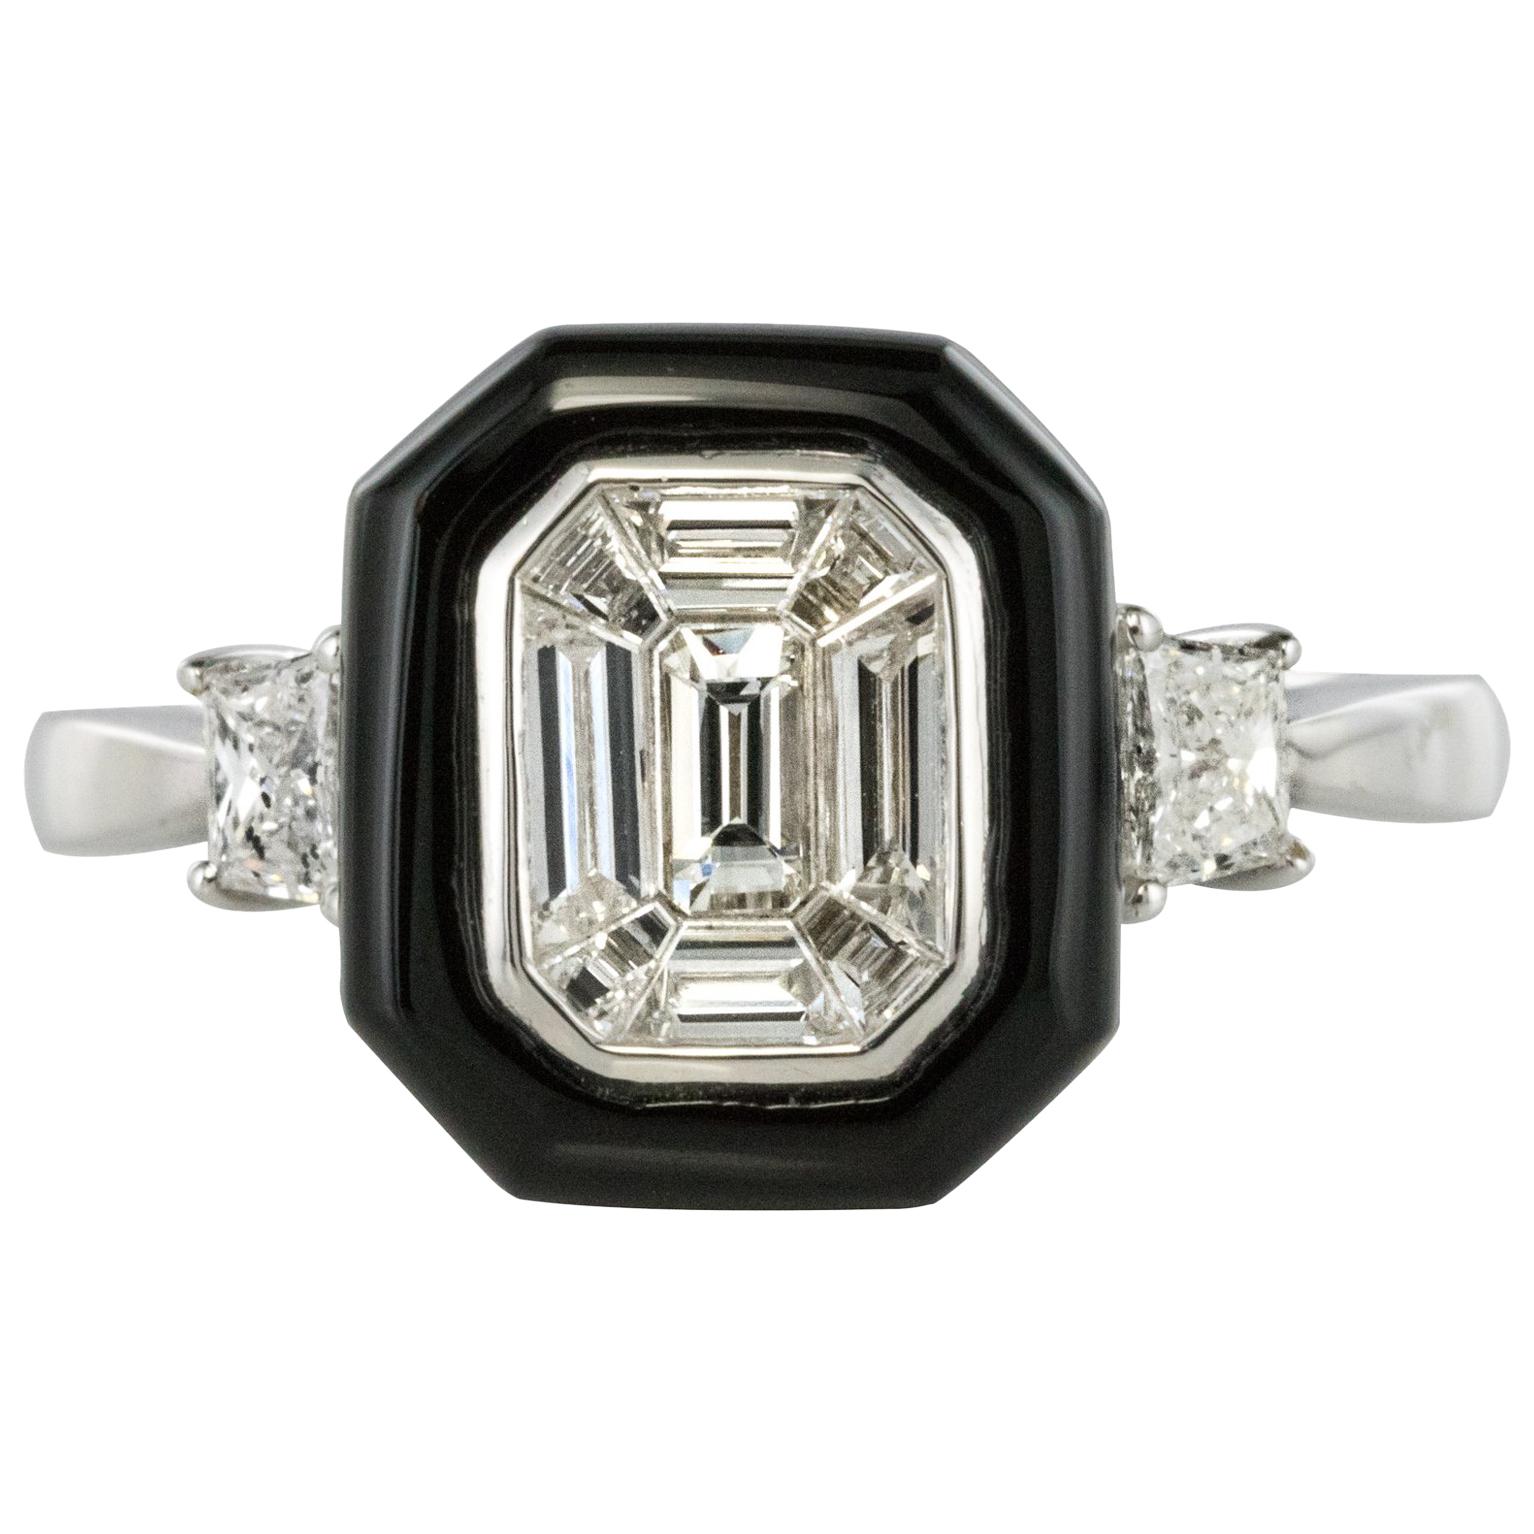 Neu Art Deco Stil Baguette Diamant Schwarzer Achat Ring